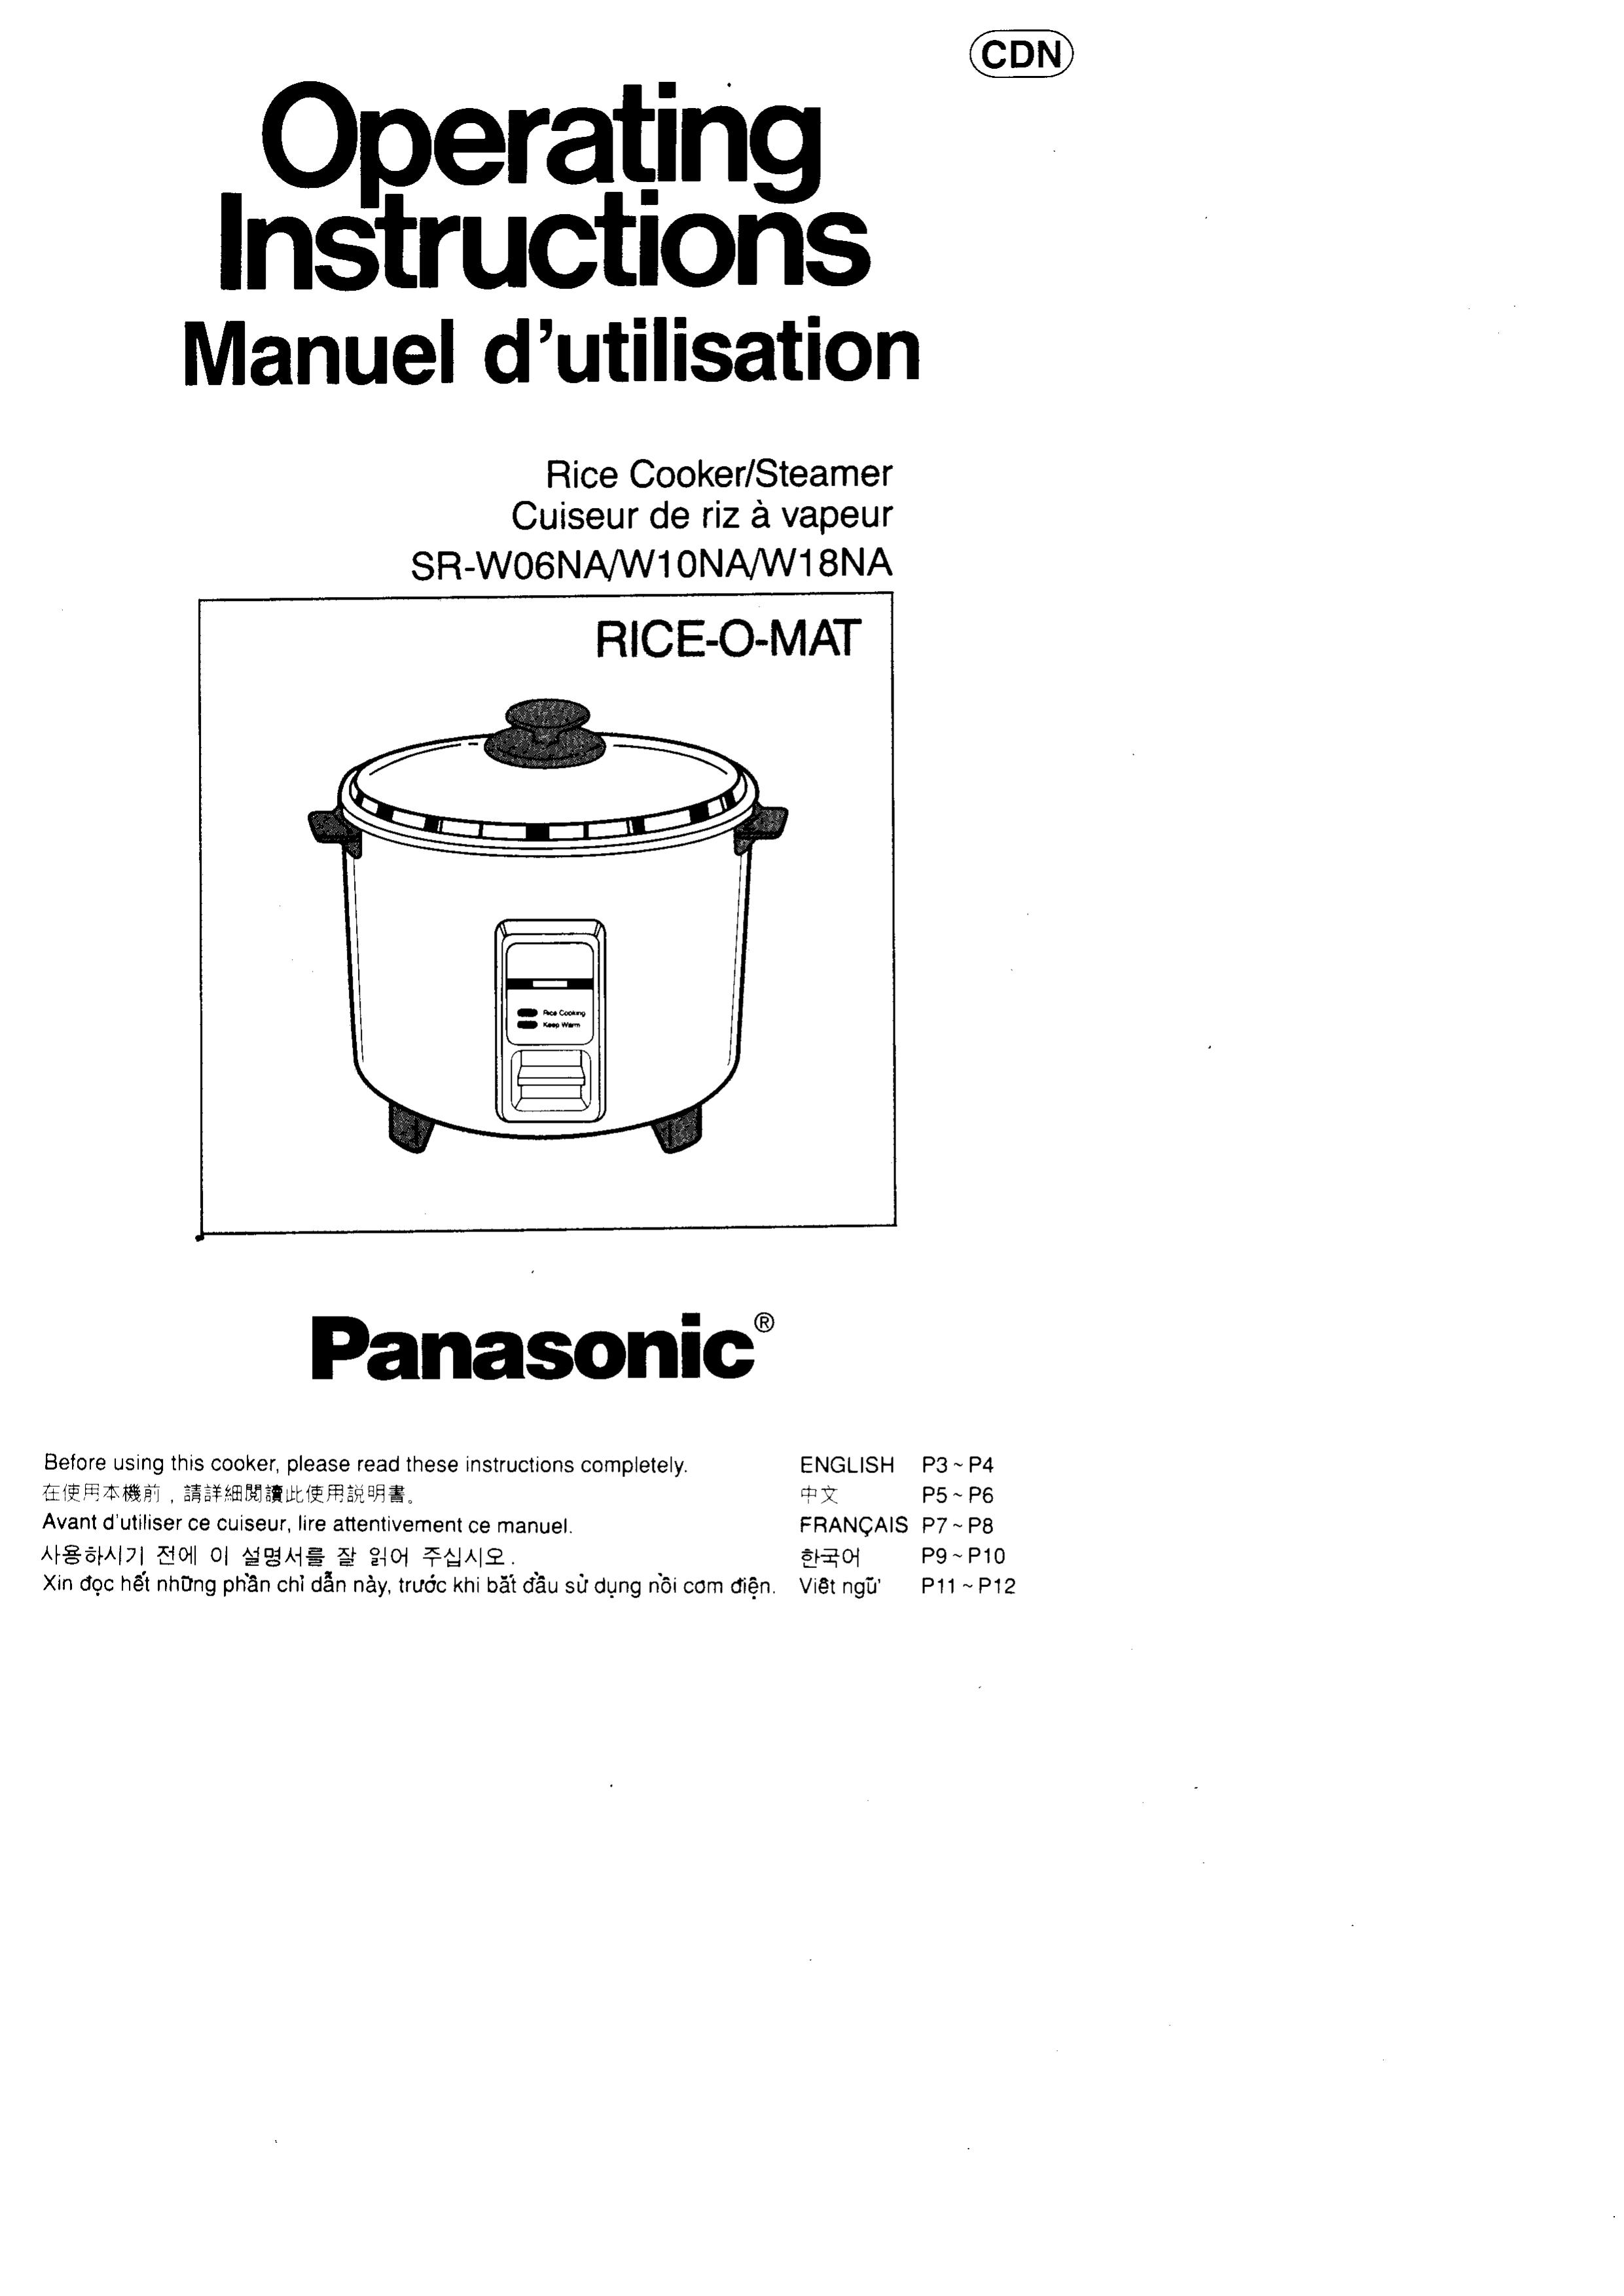 Panasonic W1ONAM18NA Rice Cooker User Manual